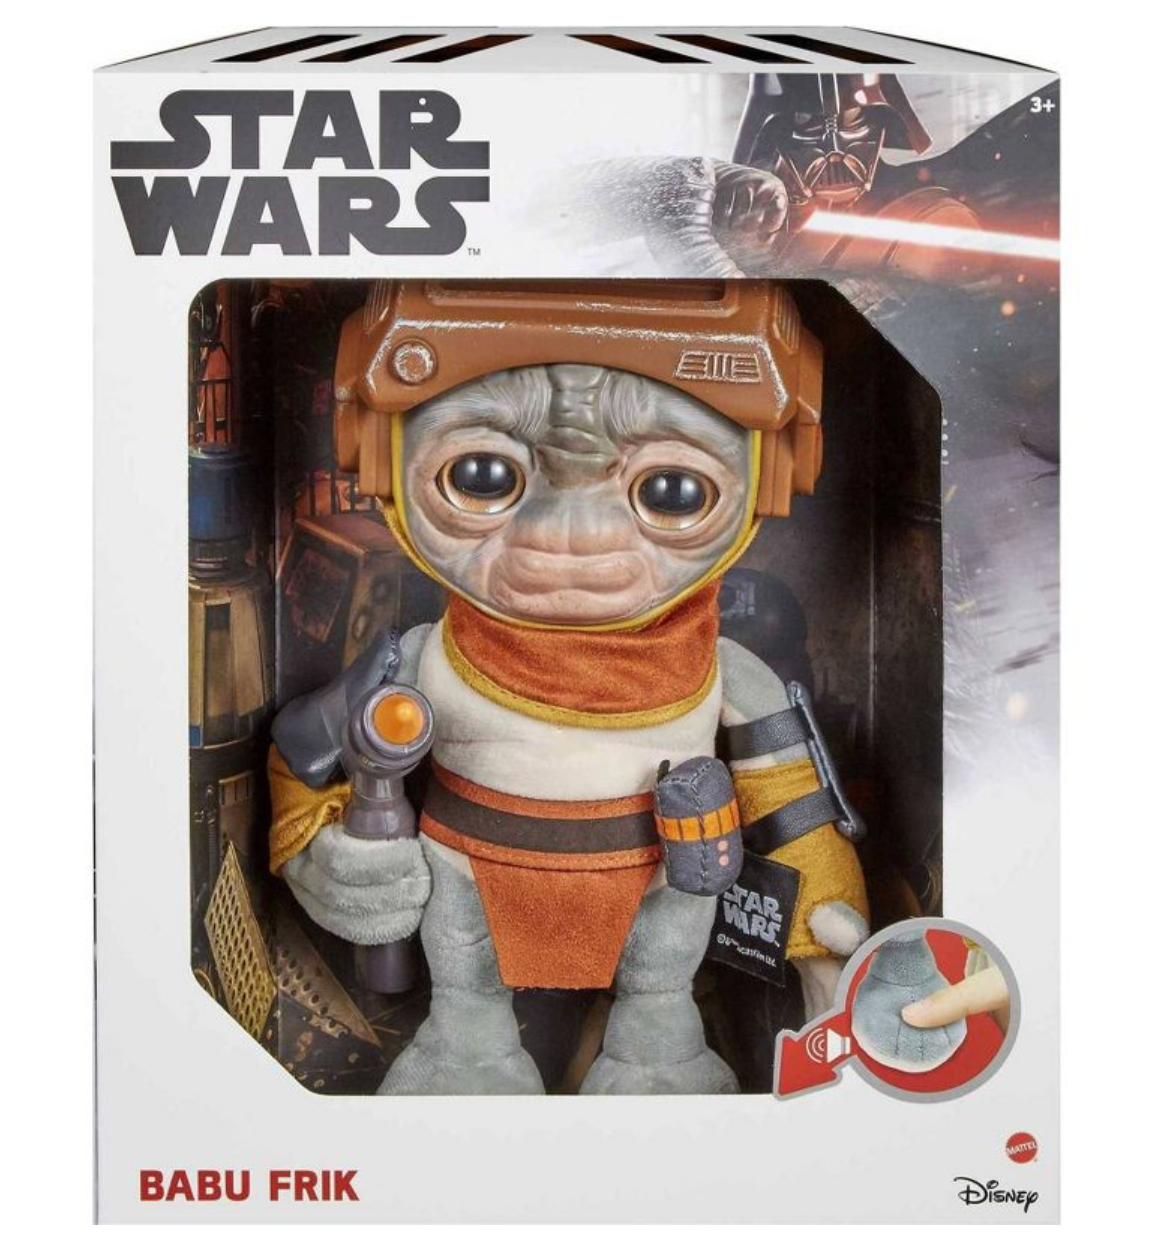 Disney Star Wars Babu Frik Plush Toy New with Box